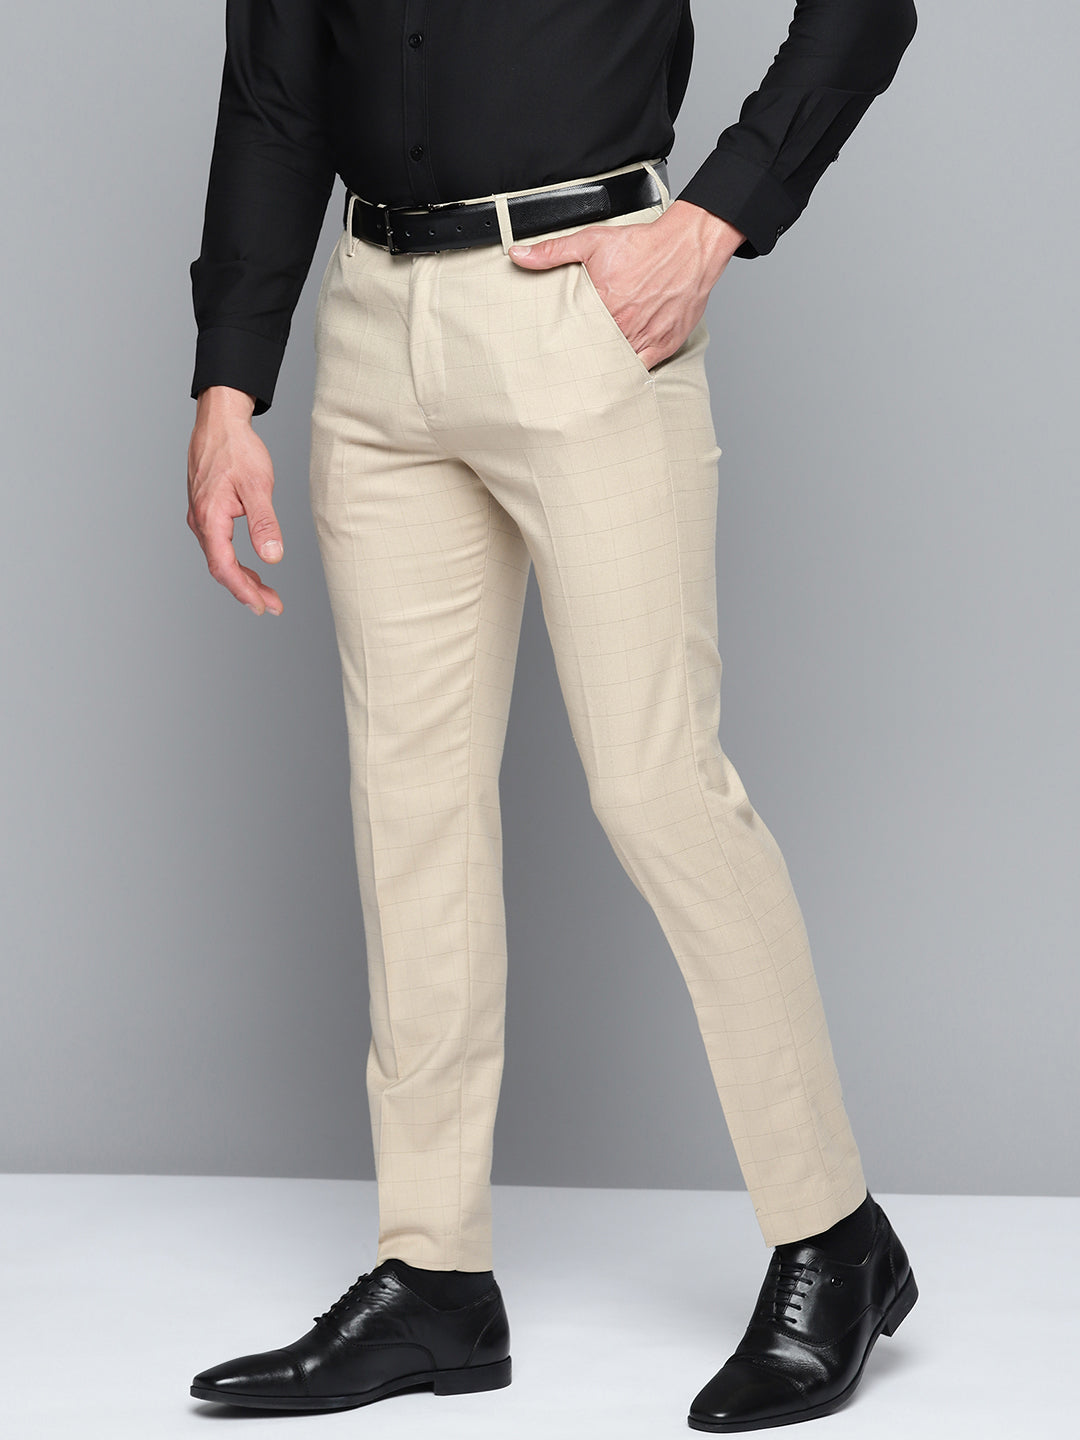 Cotton Grey Mens Formal Lycra Pants at Rs 475/piece in Mumbai | ID:  2850813485273